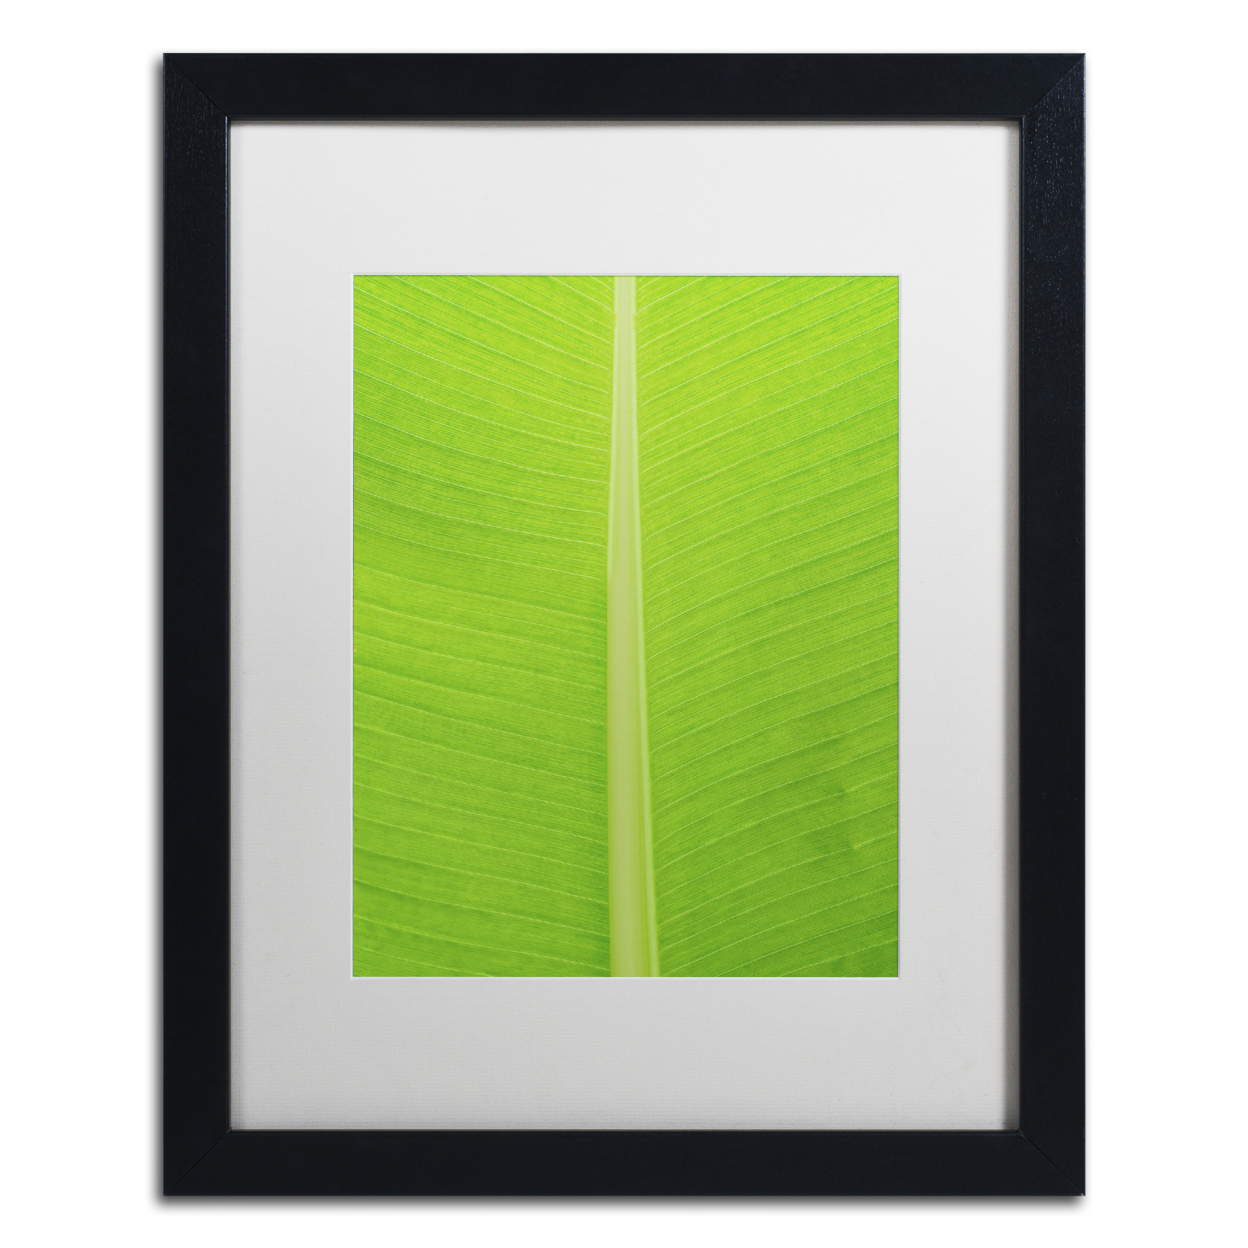 Cora Niele 'Leaf Texture I' Black Wooden Framed Art 18 X 22 Inches